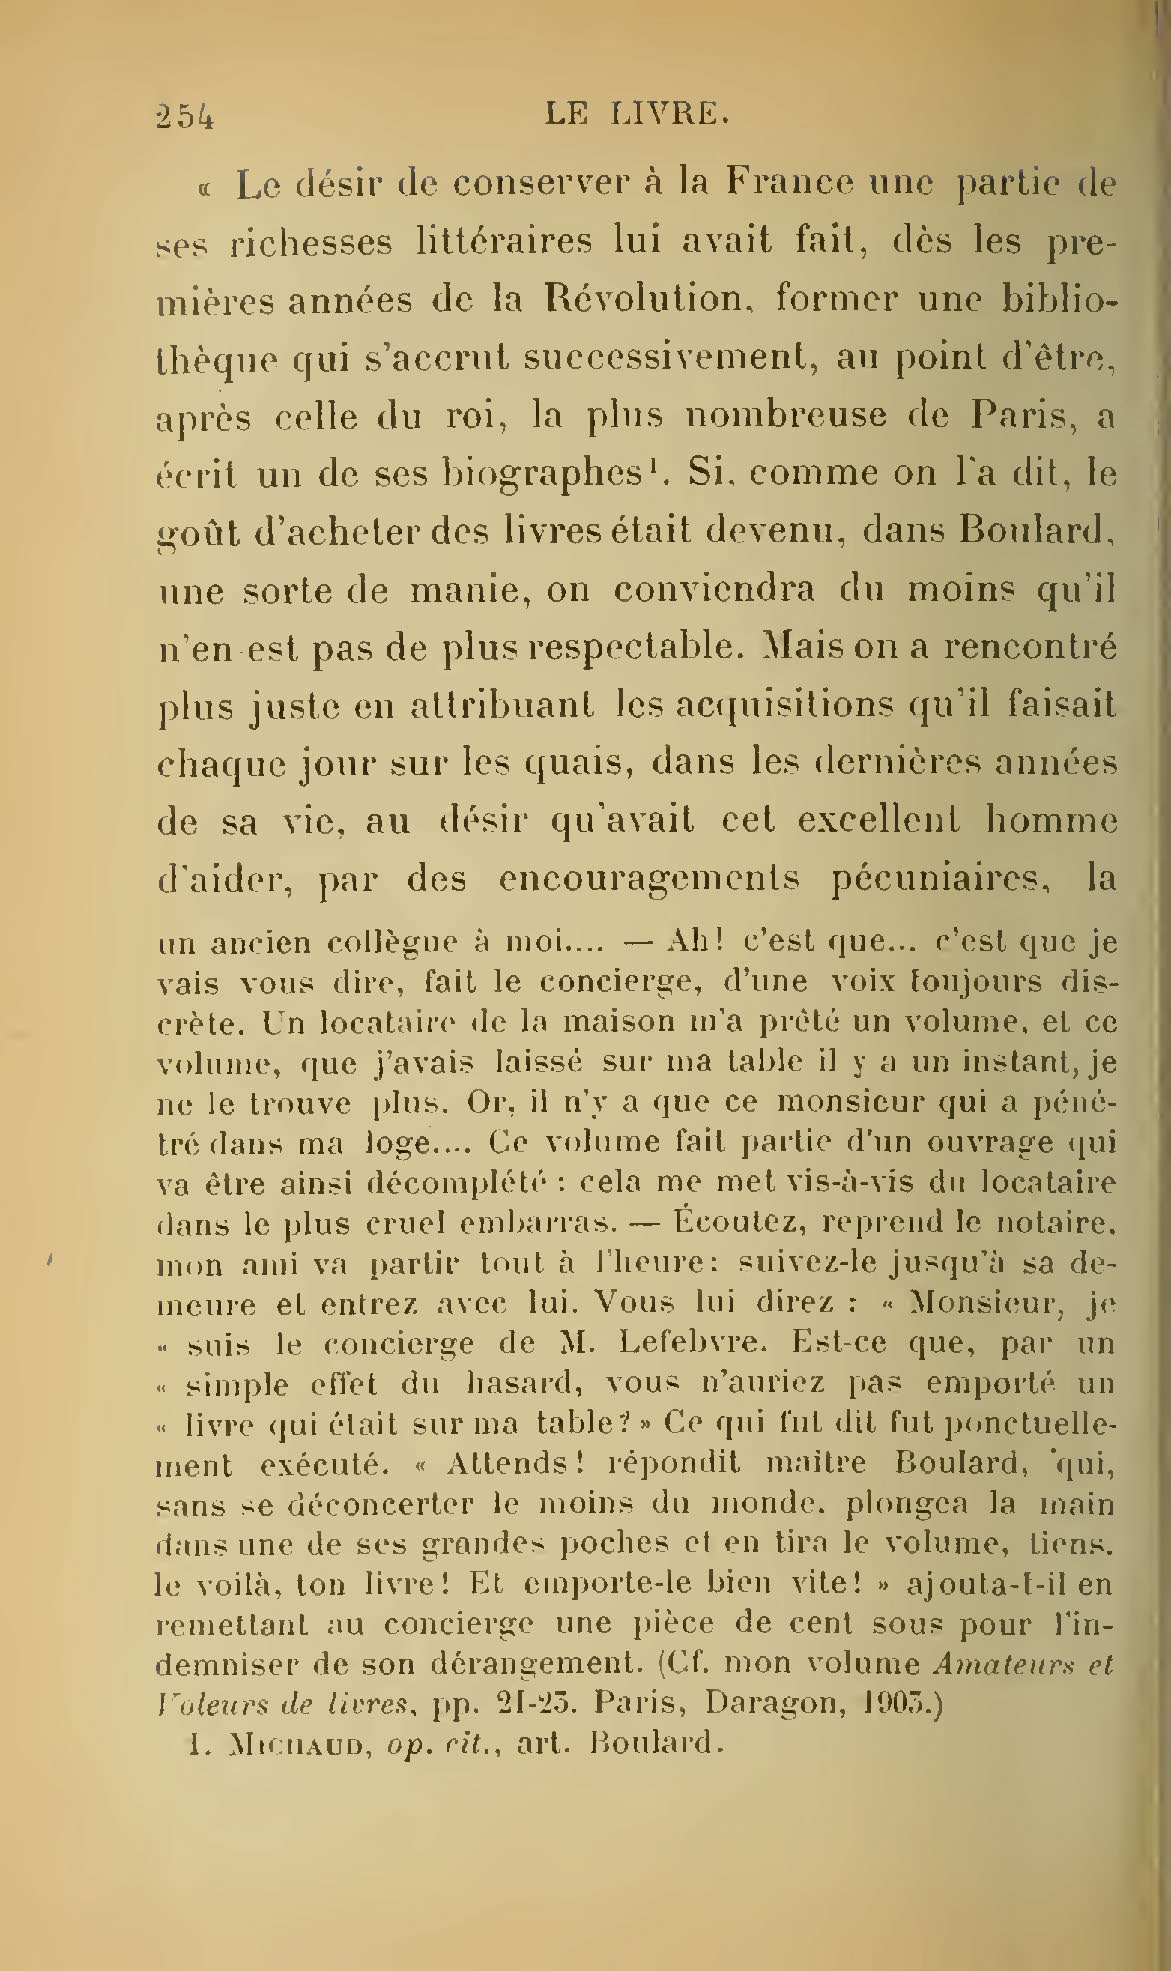 Albert Cim, Le Livre, t. II, p. 254.